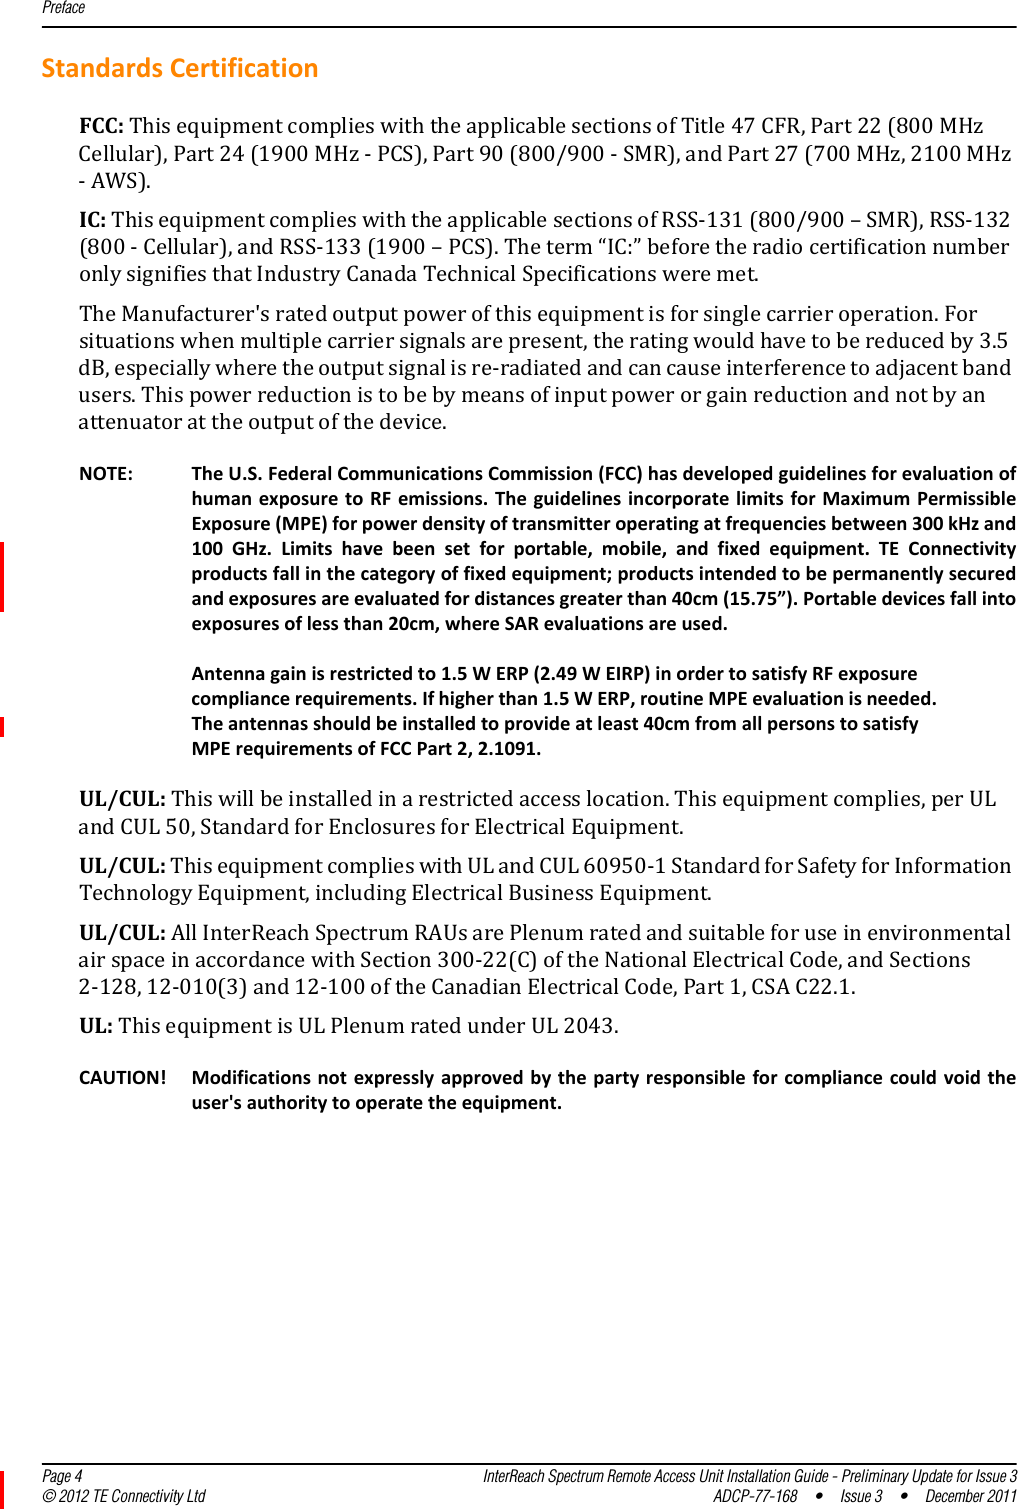 Page 6 of ADC Telecommunications S2197-011 Spectrum 700 Path 2/HP-AWS Path 2 SRAU User Manual 